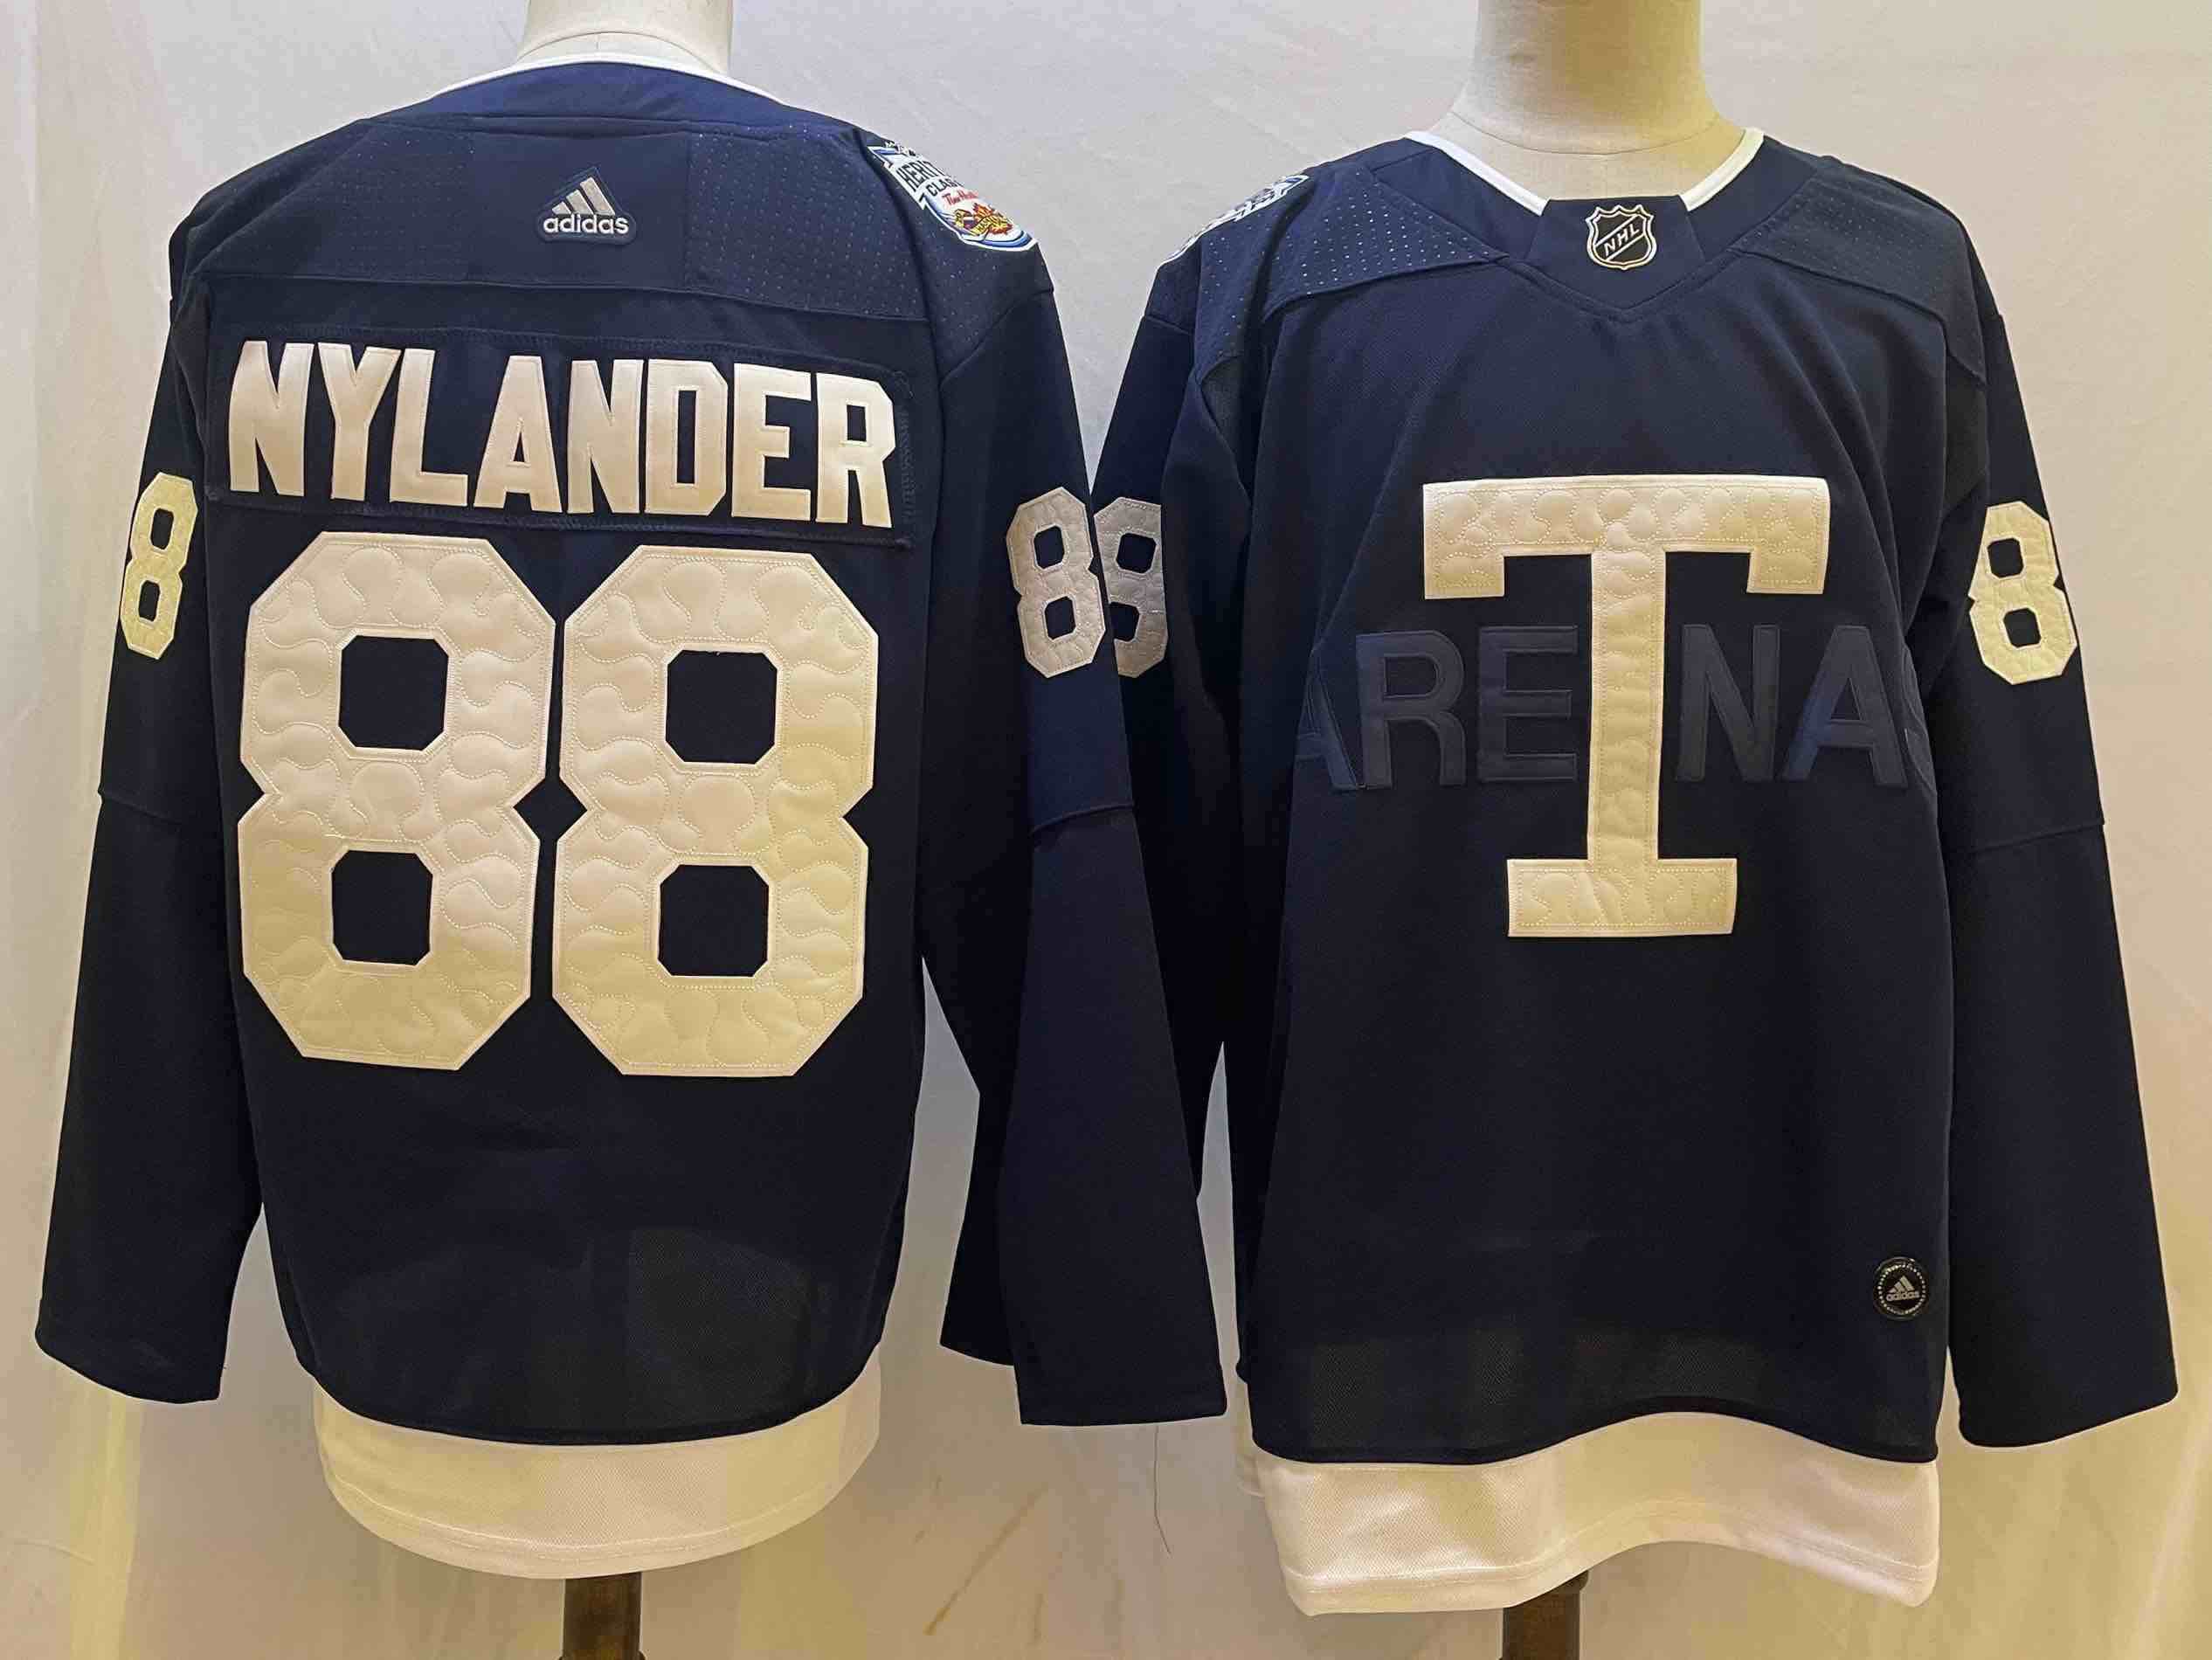 NHL Toronto Maple leafs #88 Nylander Blue Jersey